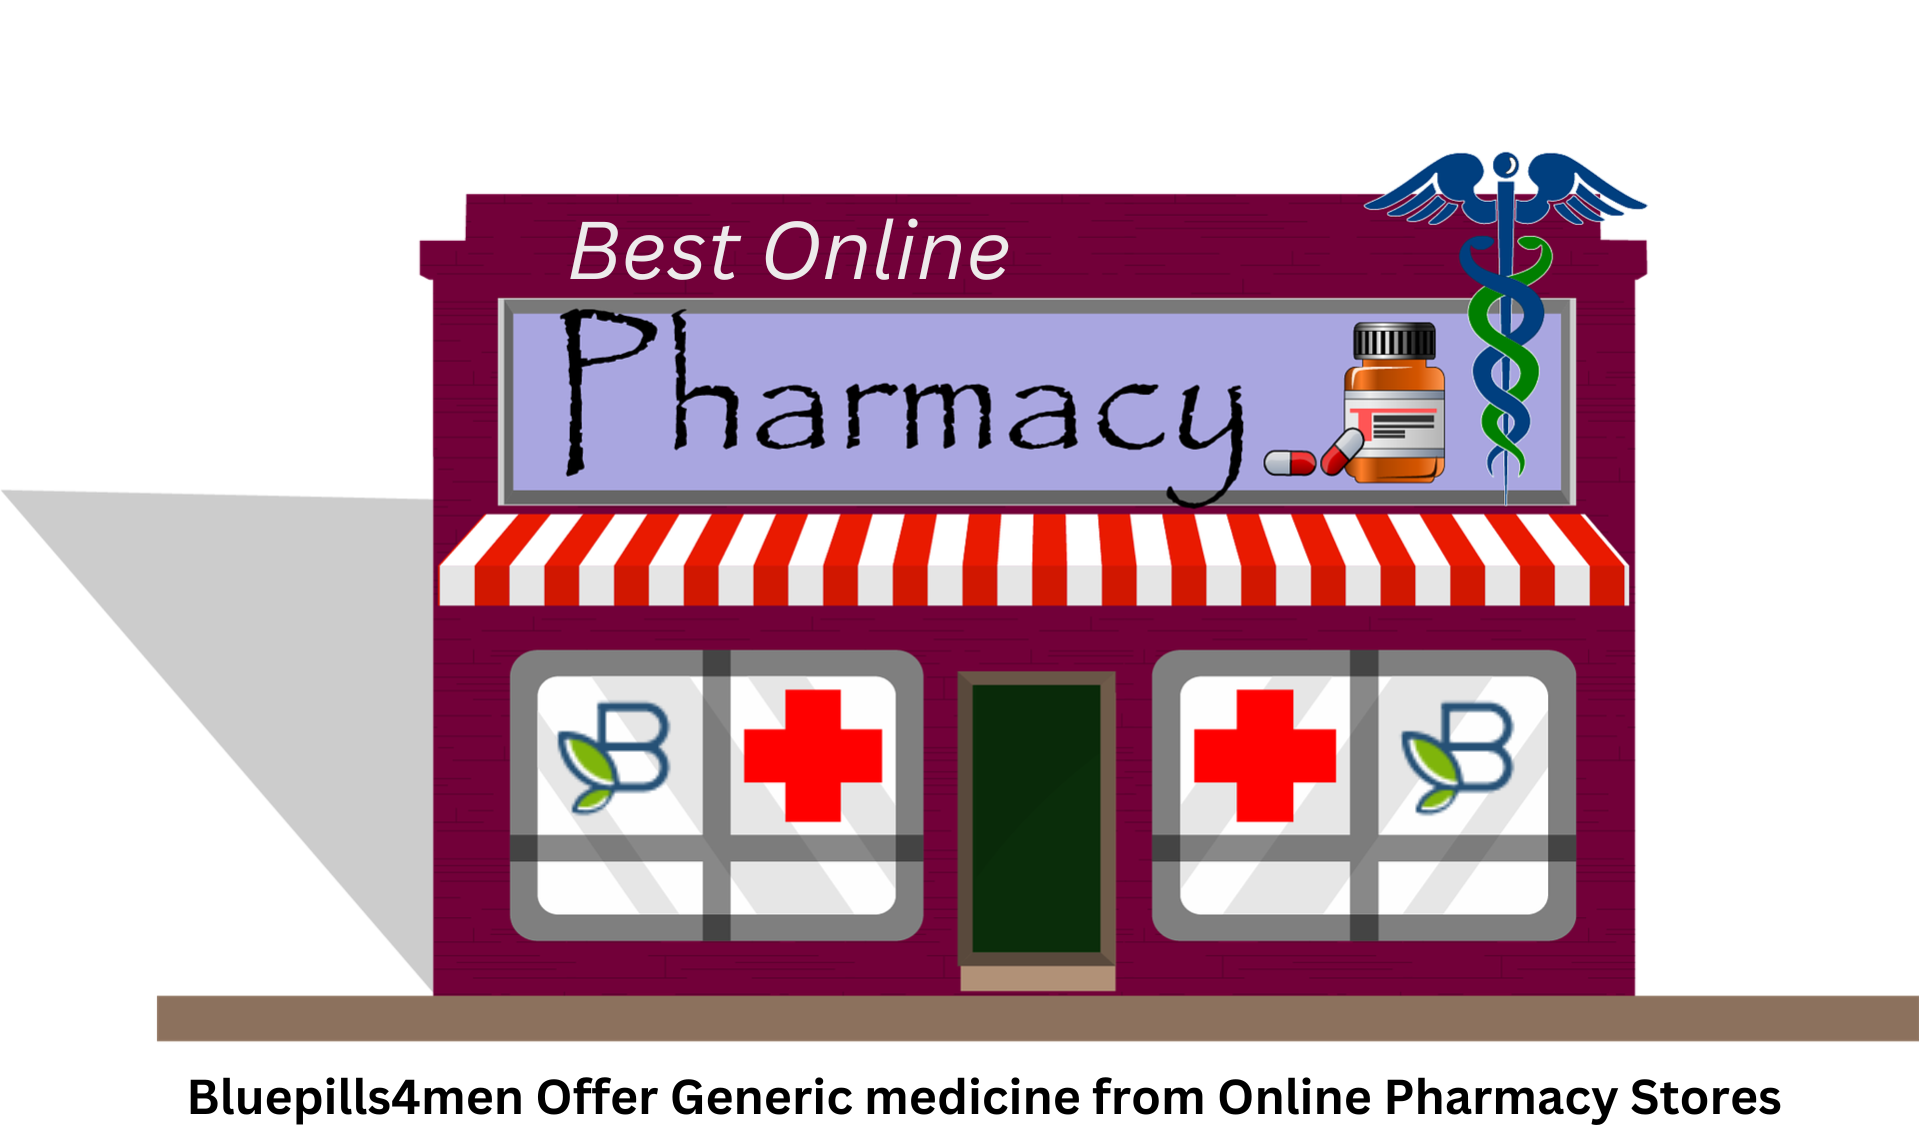 Bluepills4men Offer Generic medicine from Online Pharmacy Stores